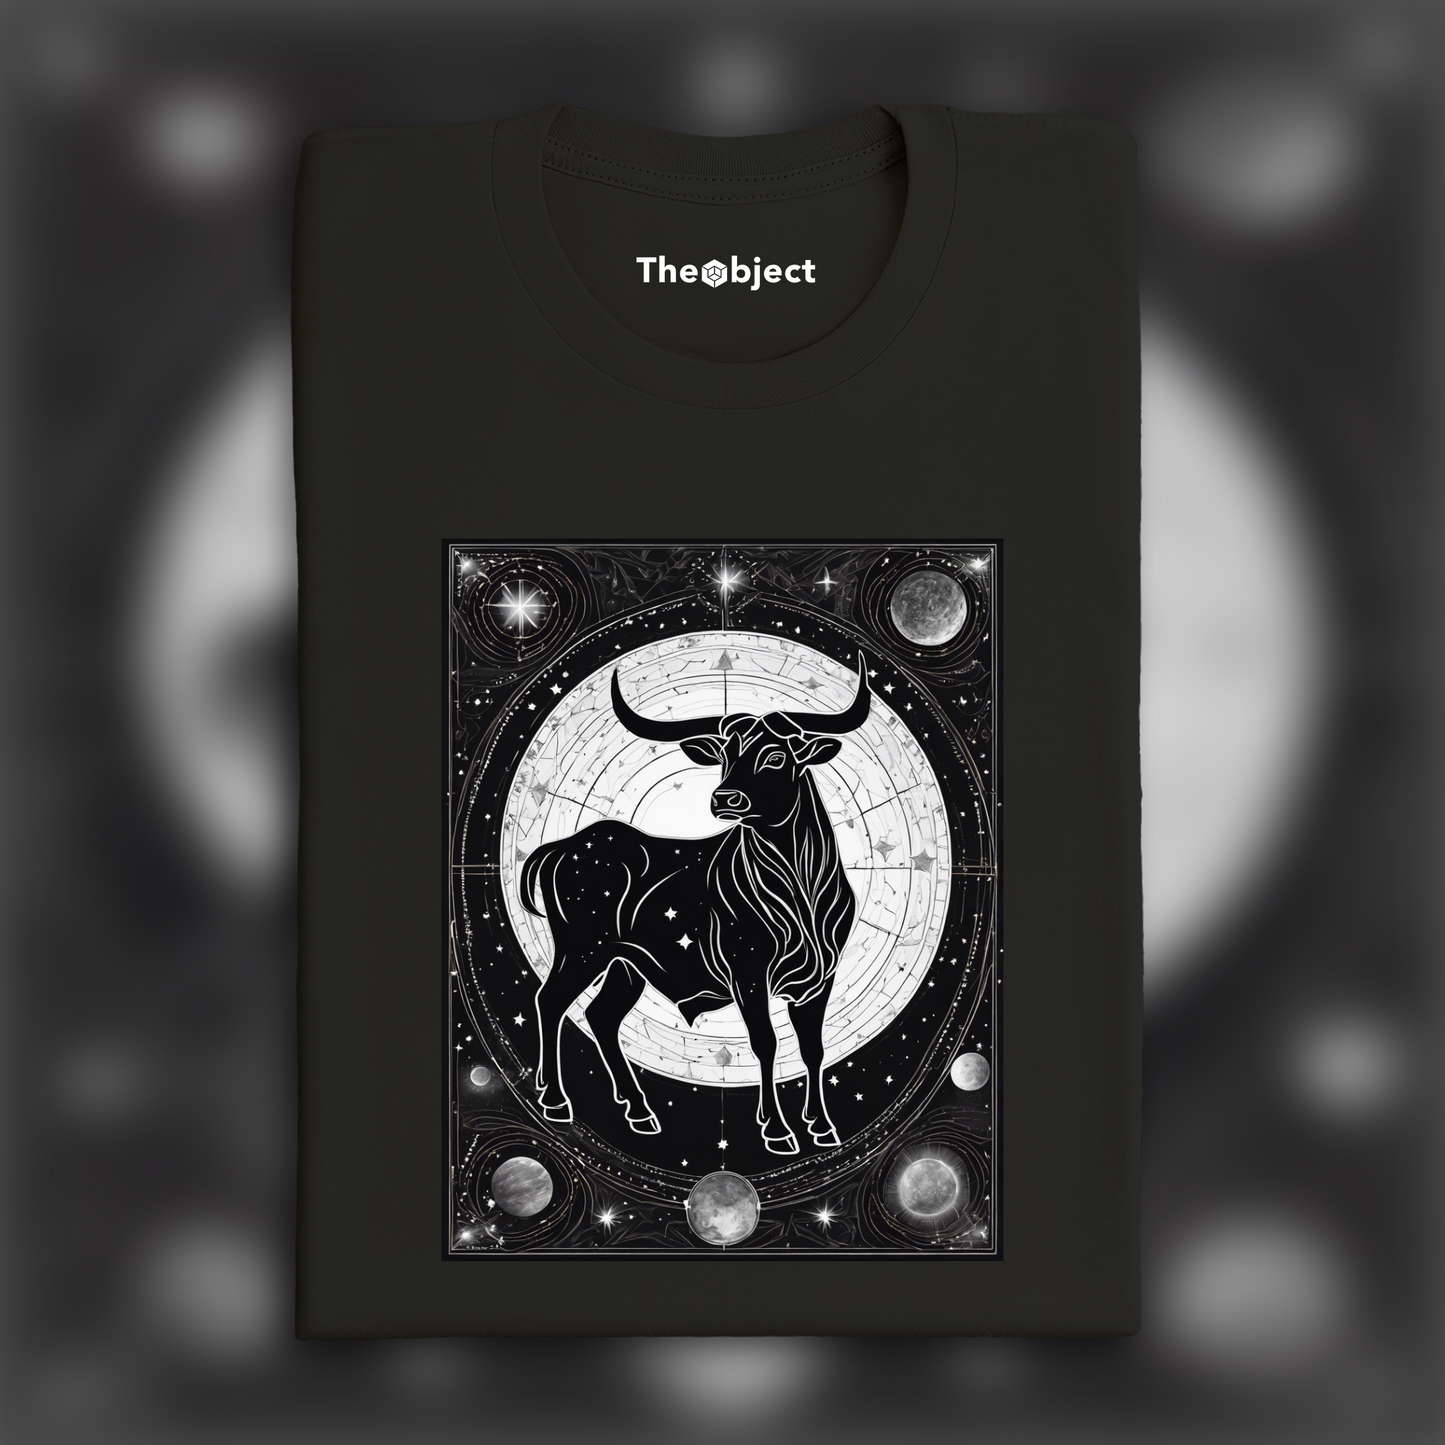 T-Shirt IA - Astrologie, Constellations, Signe du Taureau - 2178827303